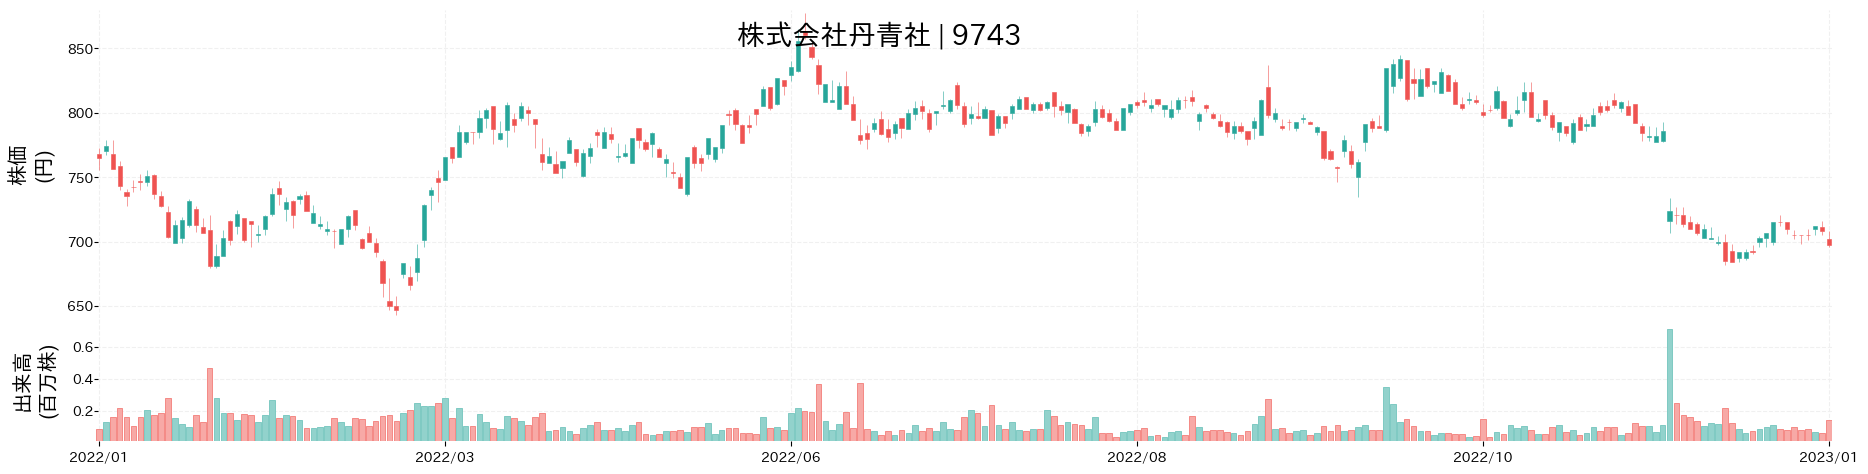 丹青社の株価推移(2022)